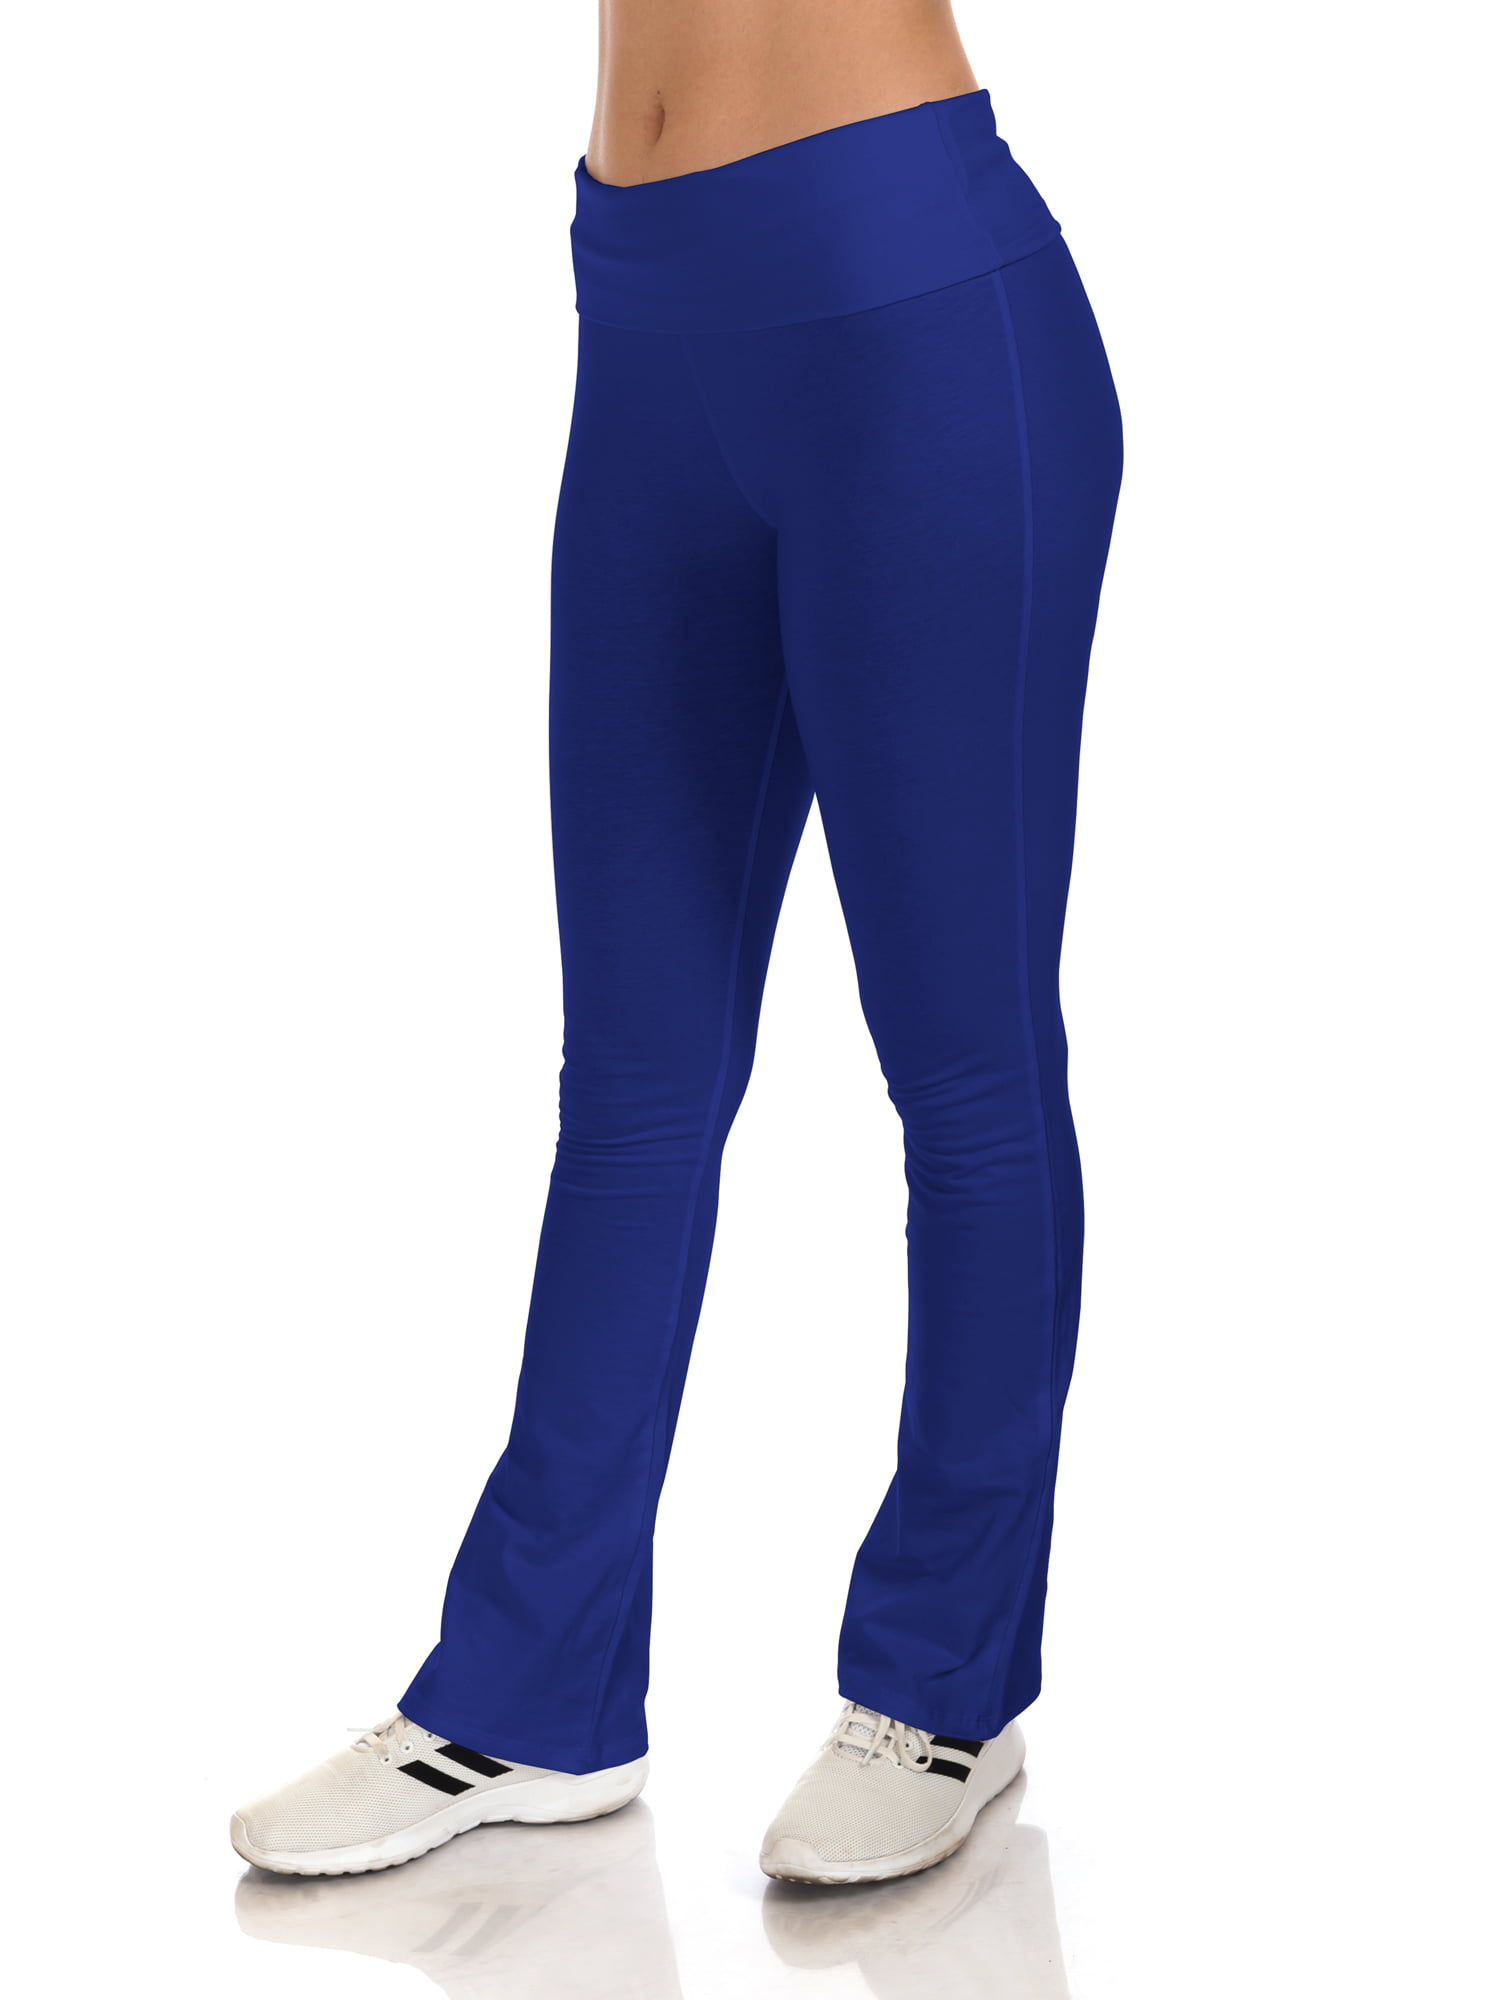 SR Women's Cotton High Waist Straight Leg Active Yoga Workout Pants (Size:  XS-5X), Small, H. Grey